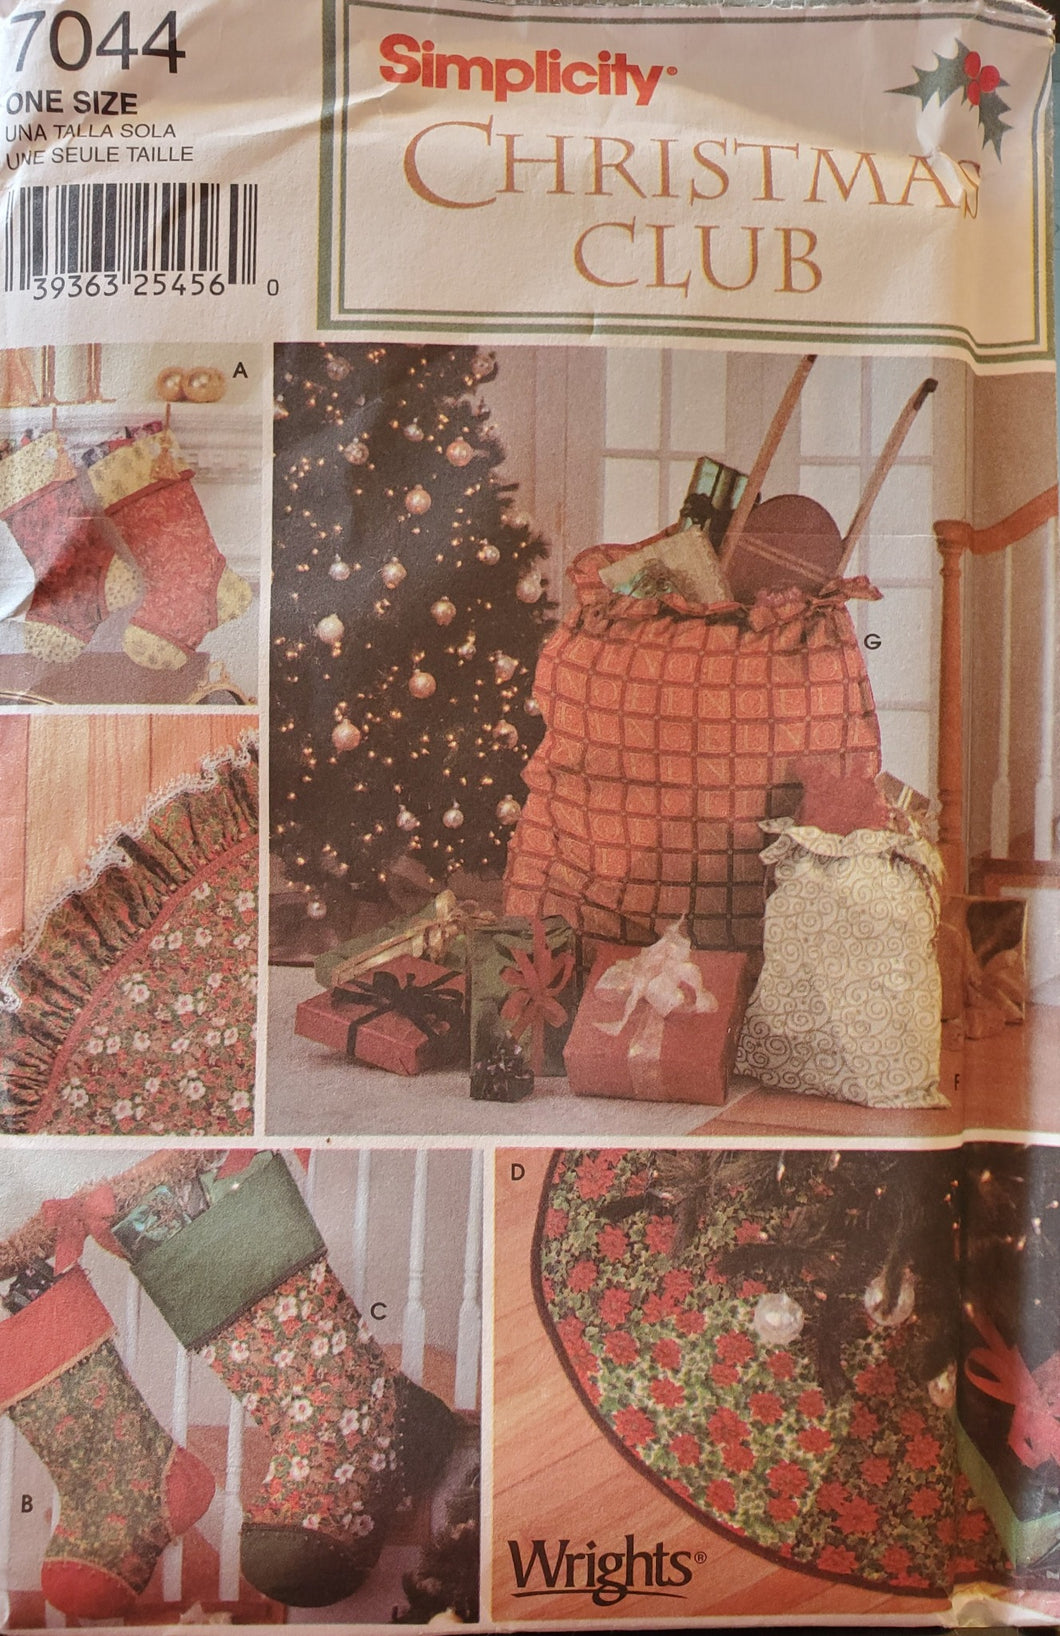 Simplicity 7044 Christmas Club Decor - stockings, tree skirts, gift bags